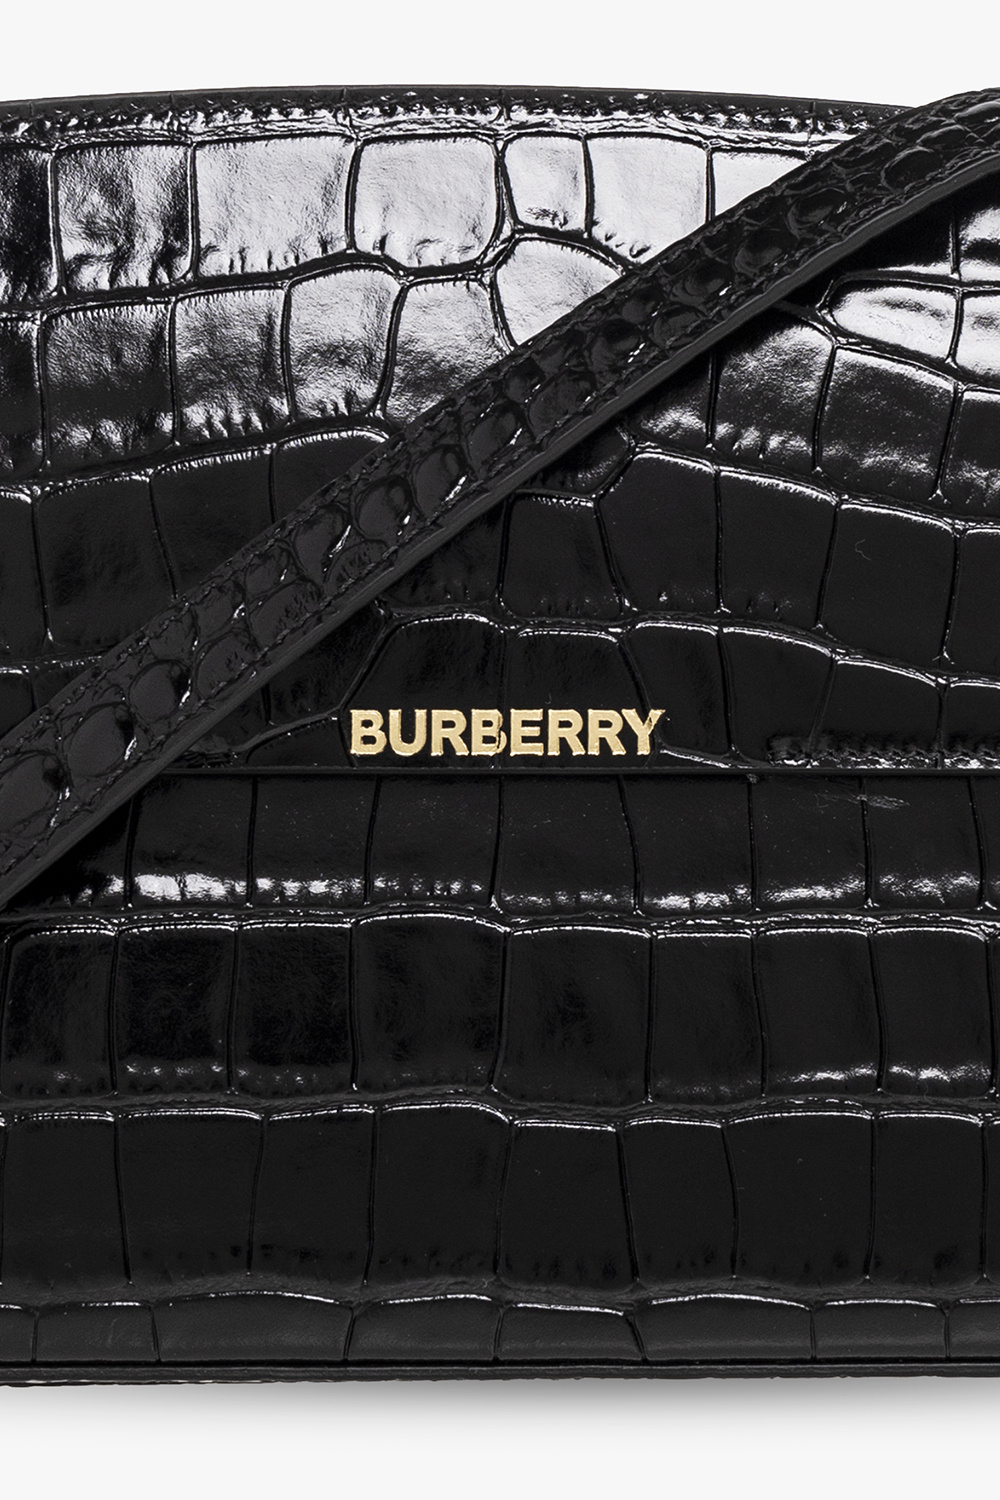 burberry reeth ‘Catherine’ shoulder bag